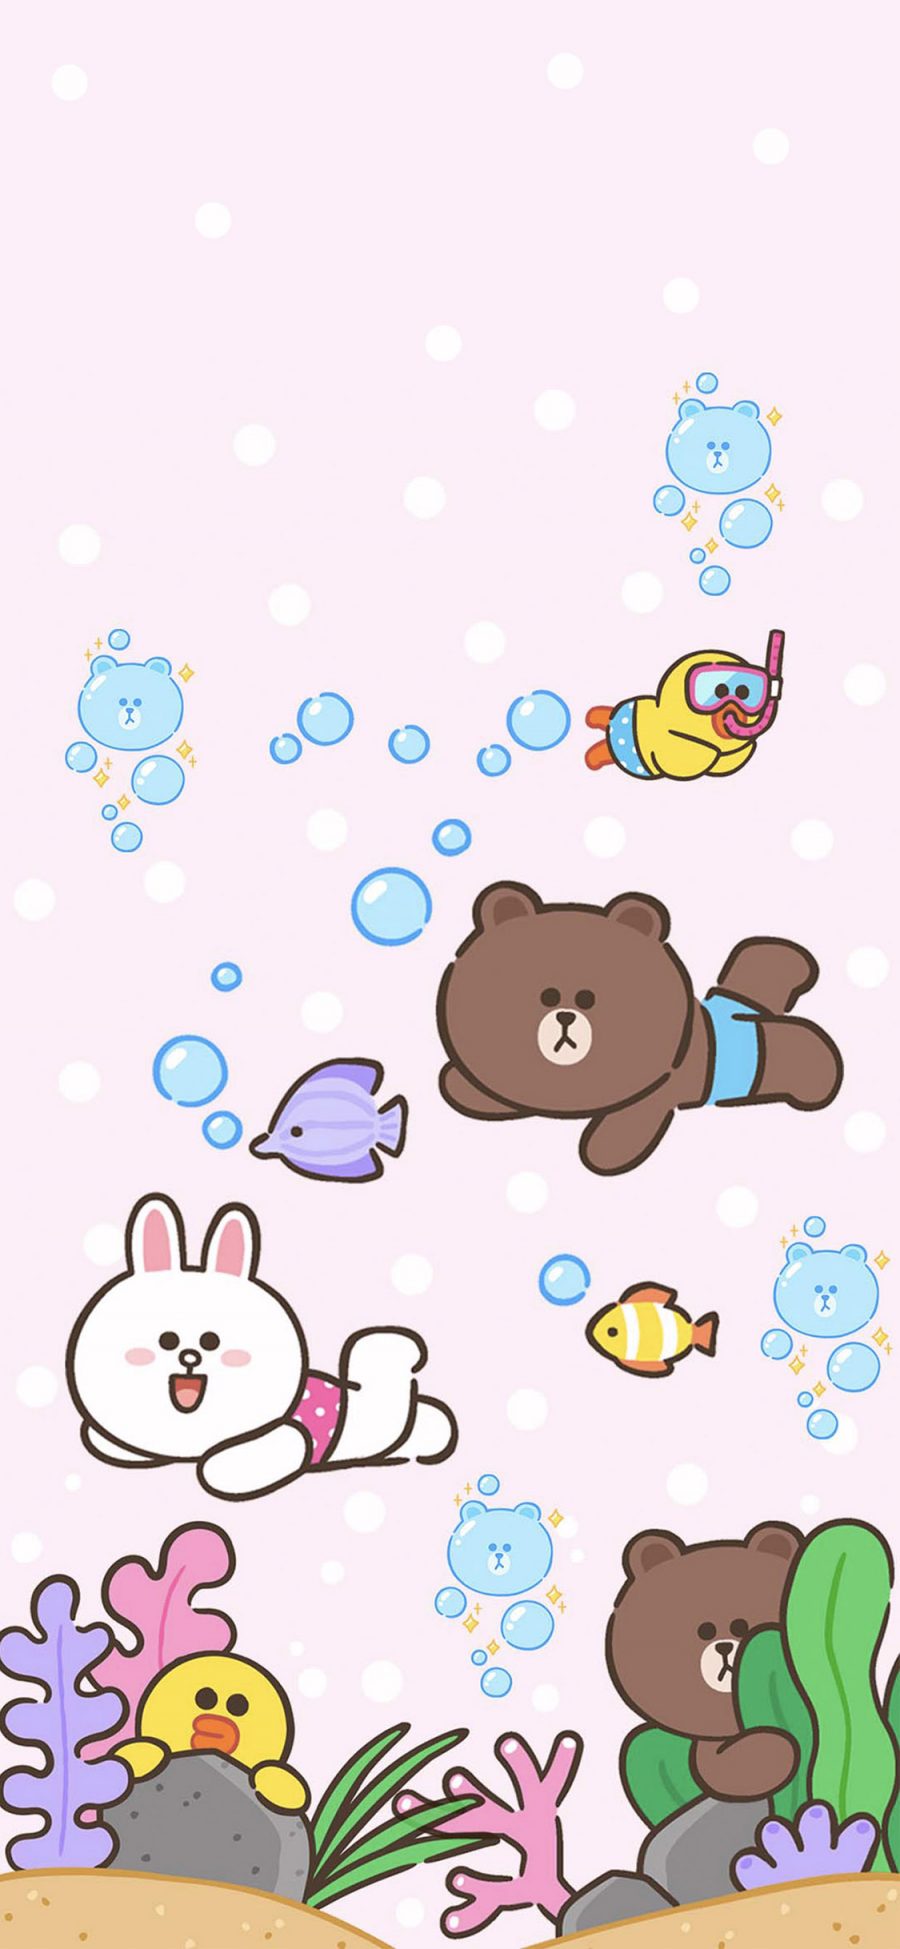 [2436×1125]linefriends 布朗熊 可妮兔 游泳 苹果手机动漫壁纸图片